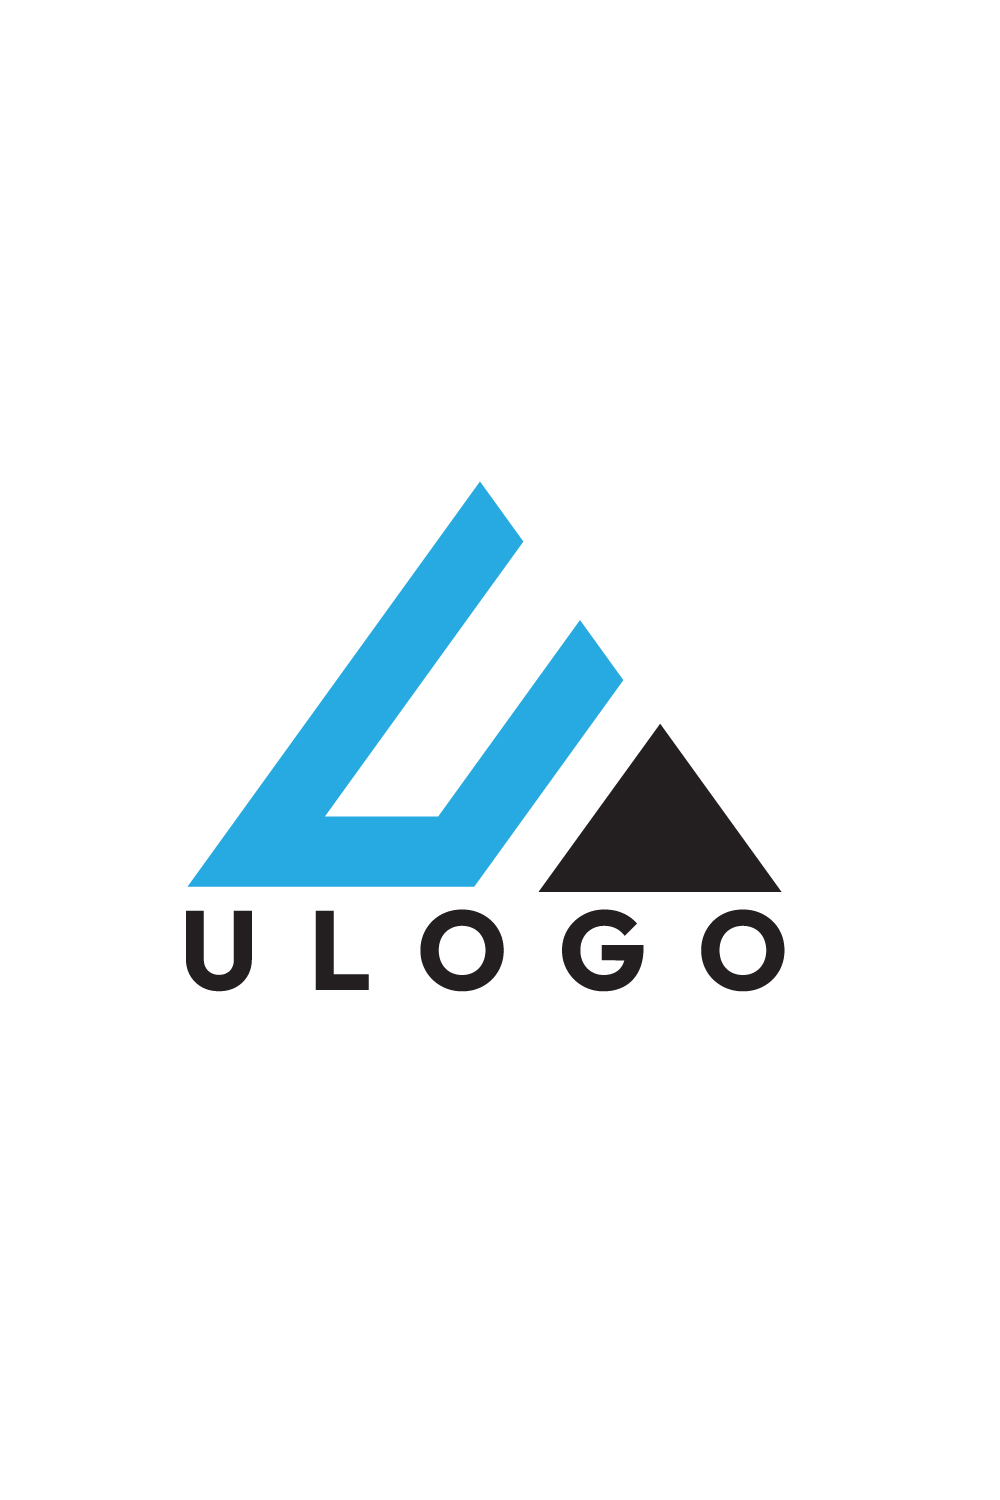 Unique U Triangle Logo Designs for Brand Identity pinterest preview image.